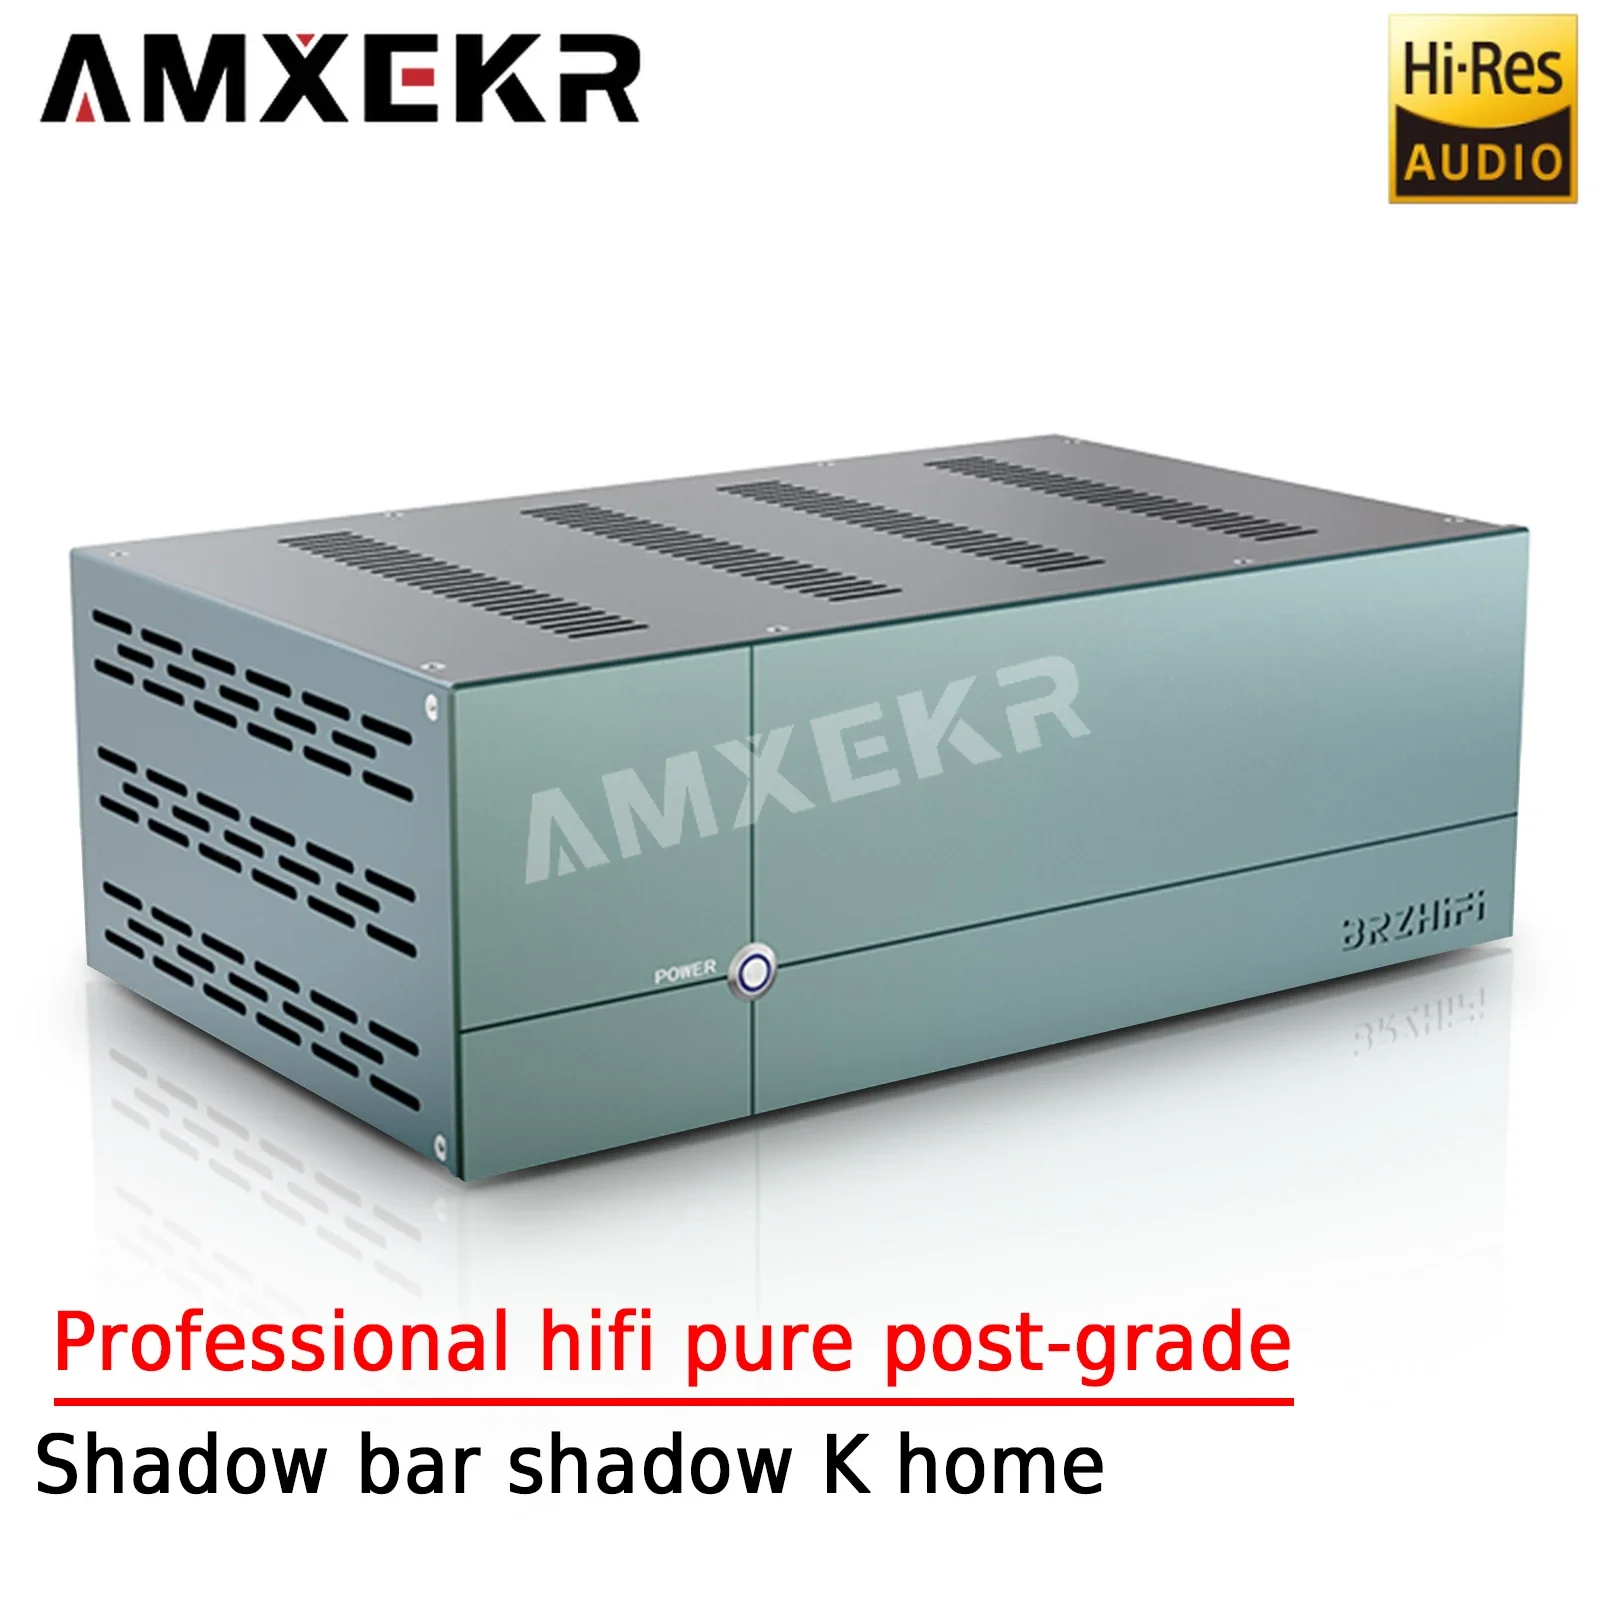 

AMXEKR A800 Home Theater 5.1 Channel Professional Hifi Amplifier High Power Pure Post-grade Video Bar Shadow K Home